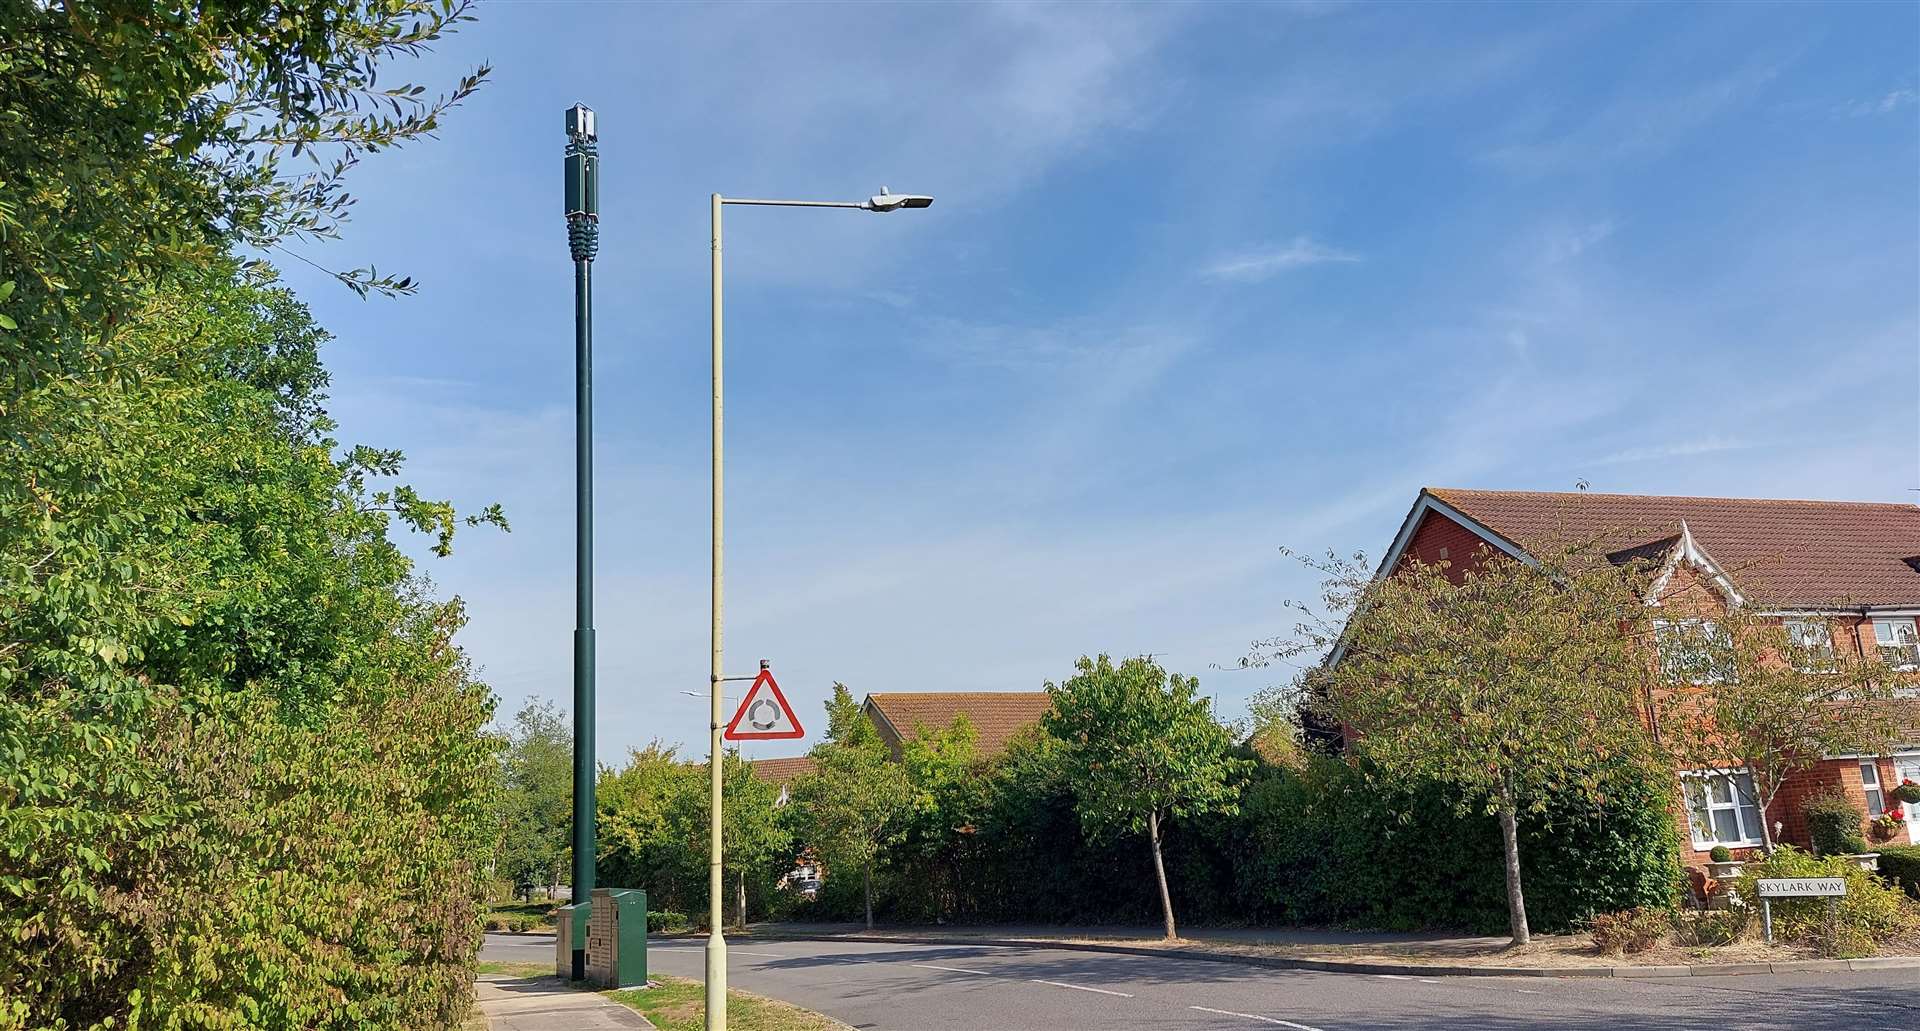 A 5G mast installed along Bluebell Way in Park Farm, Ashford